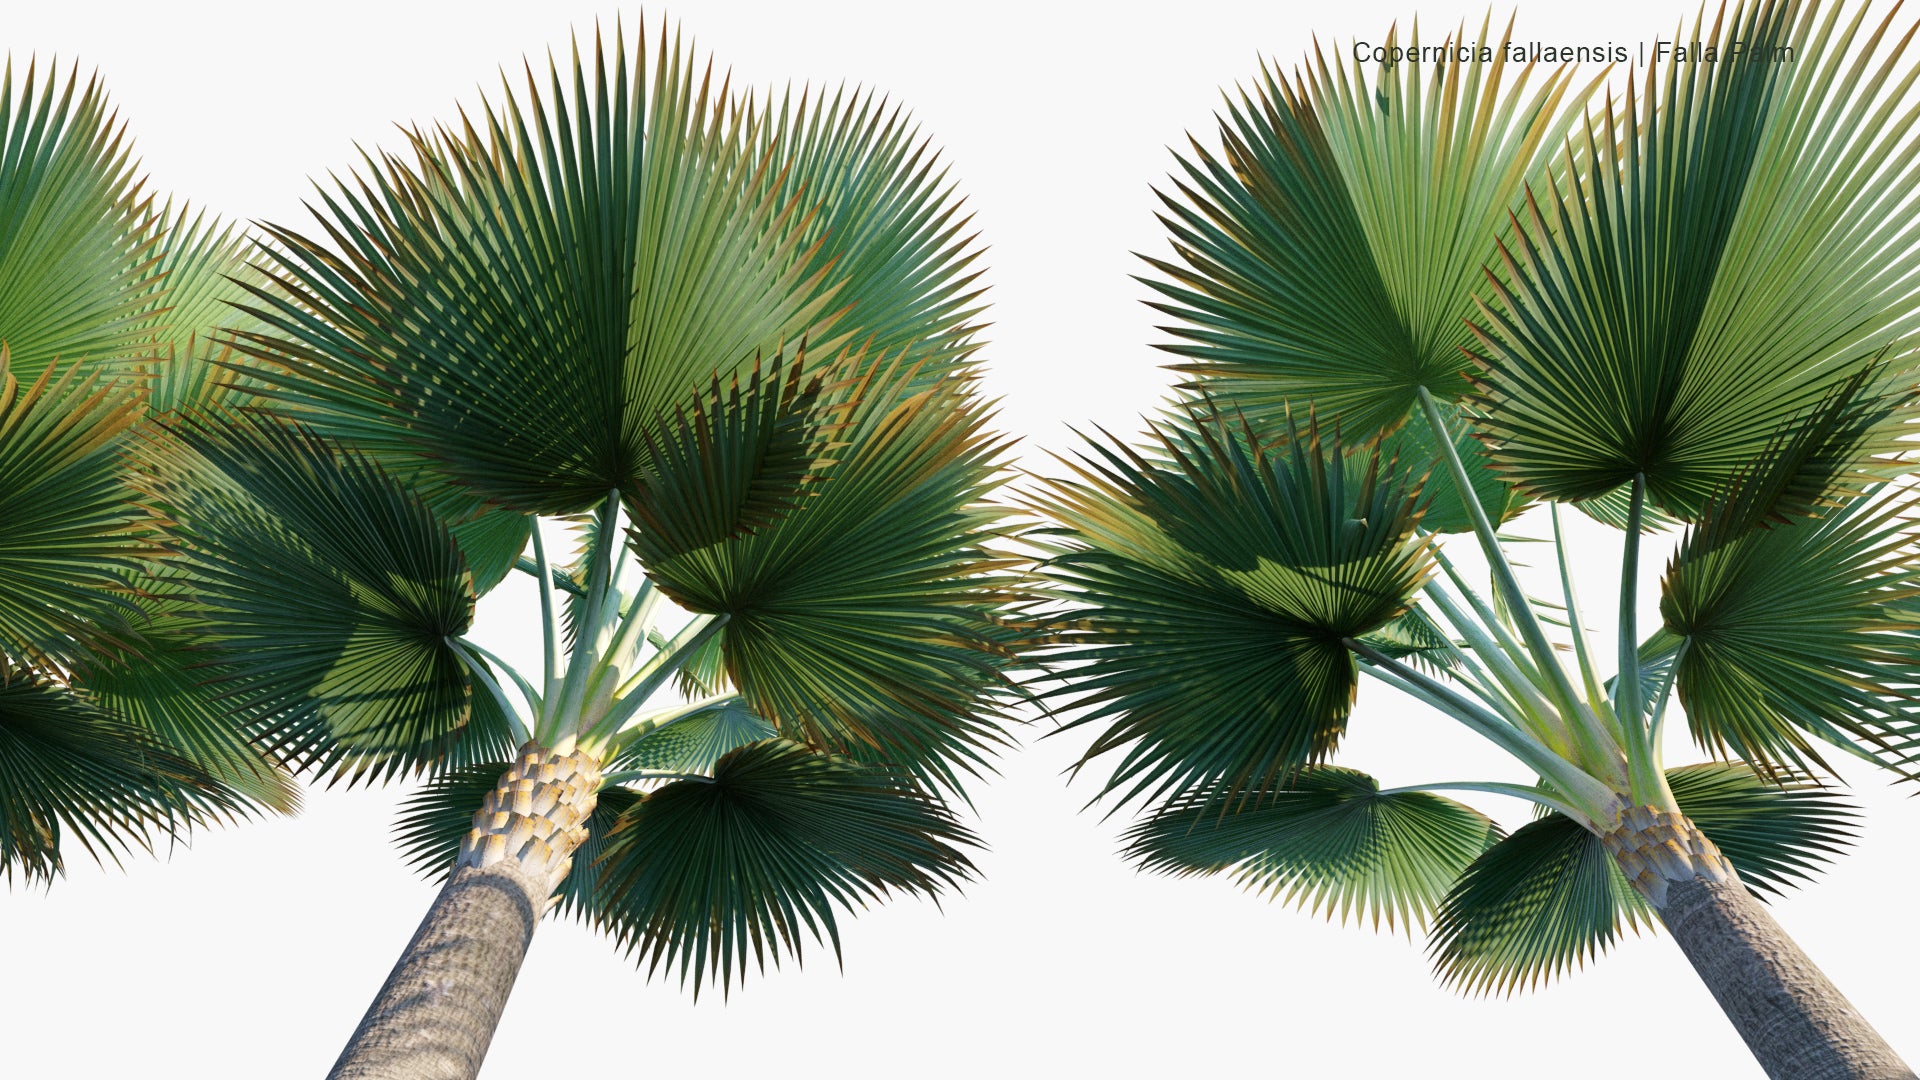 Low Poly Copernicia Fallaensis - Falla Palm, Giant Yarey Palm (3D Model)